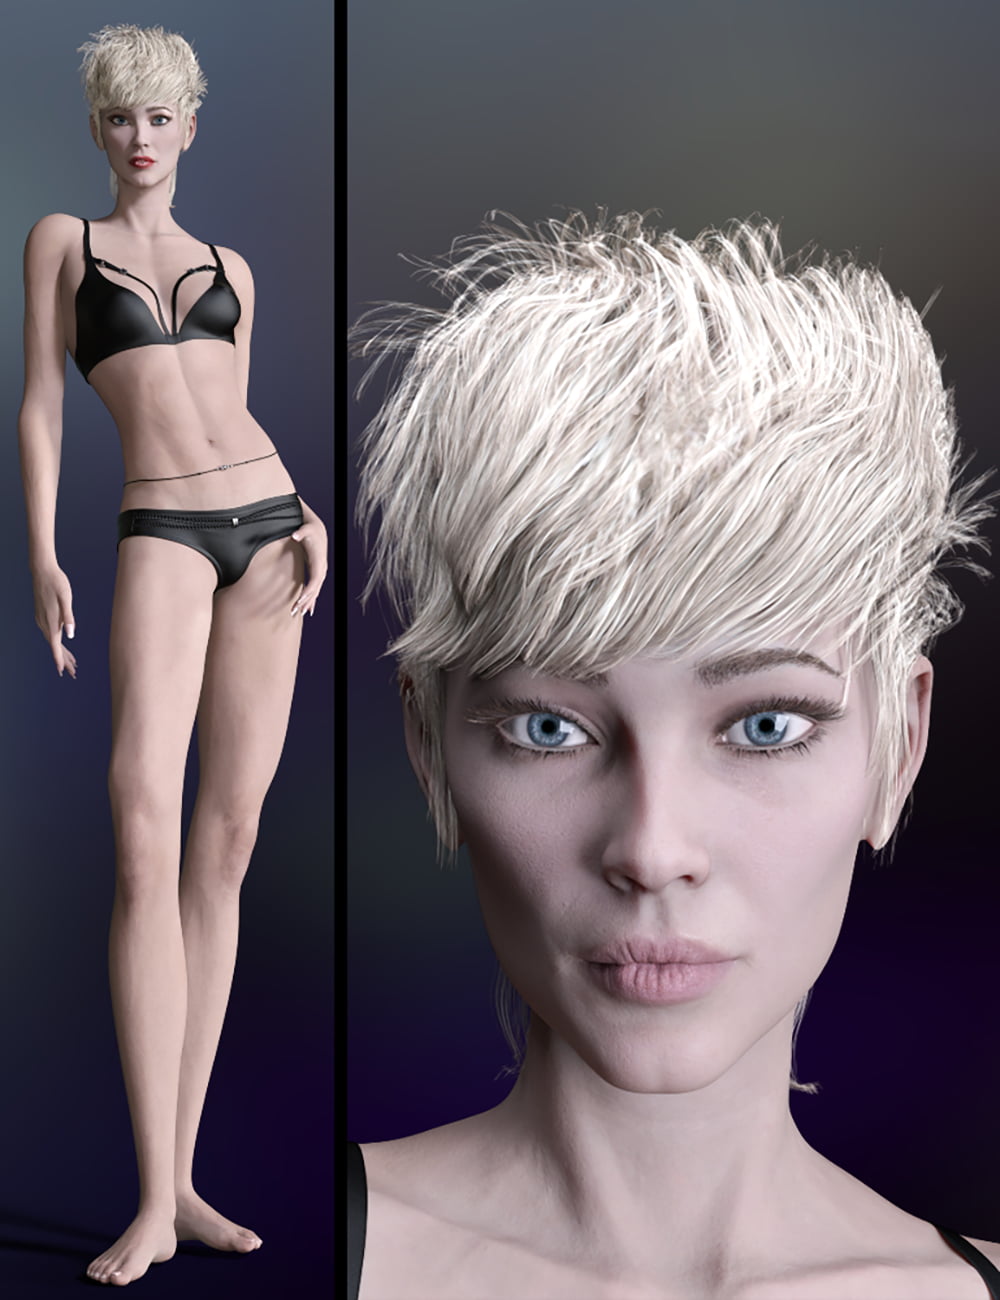 The Fashion Model HD for Genesis 8.1 Female